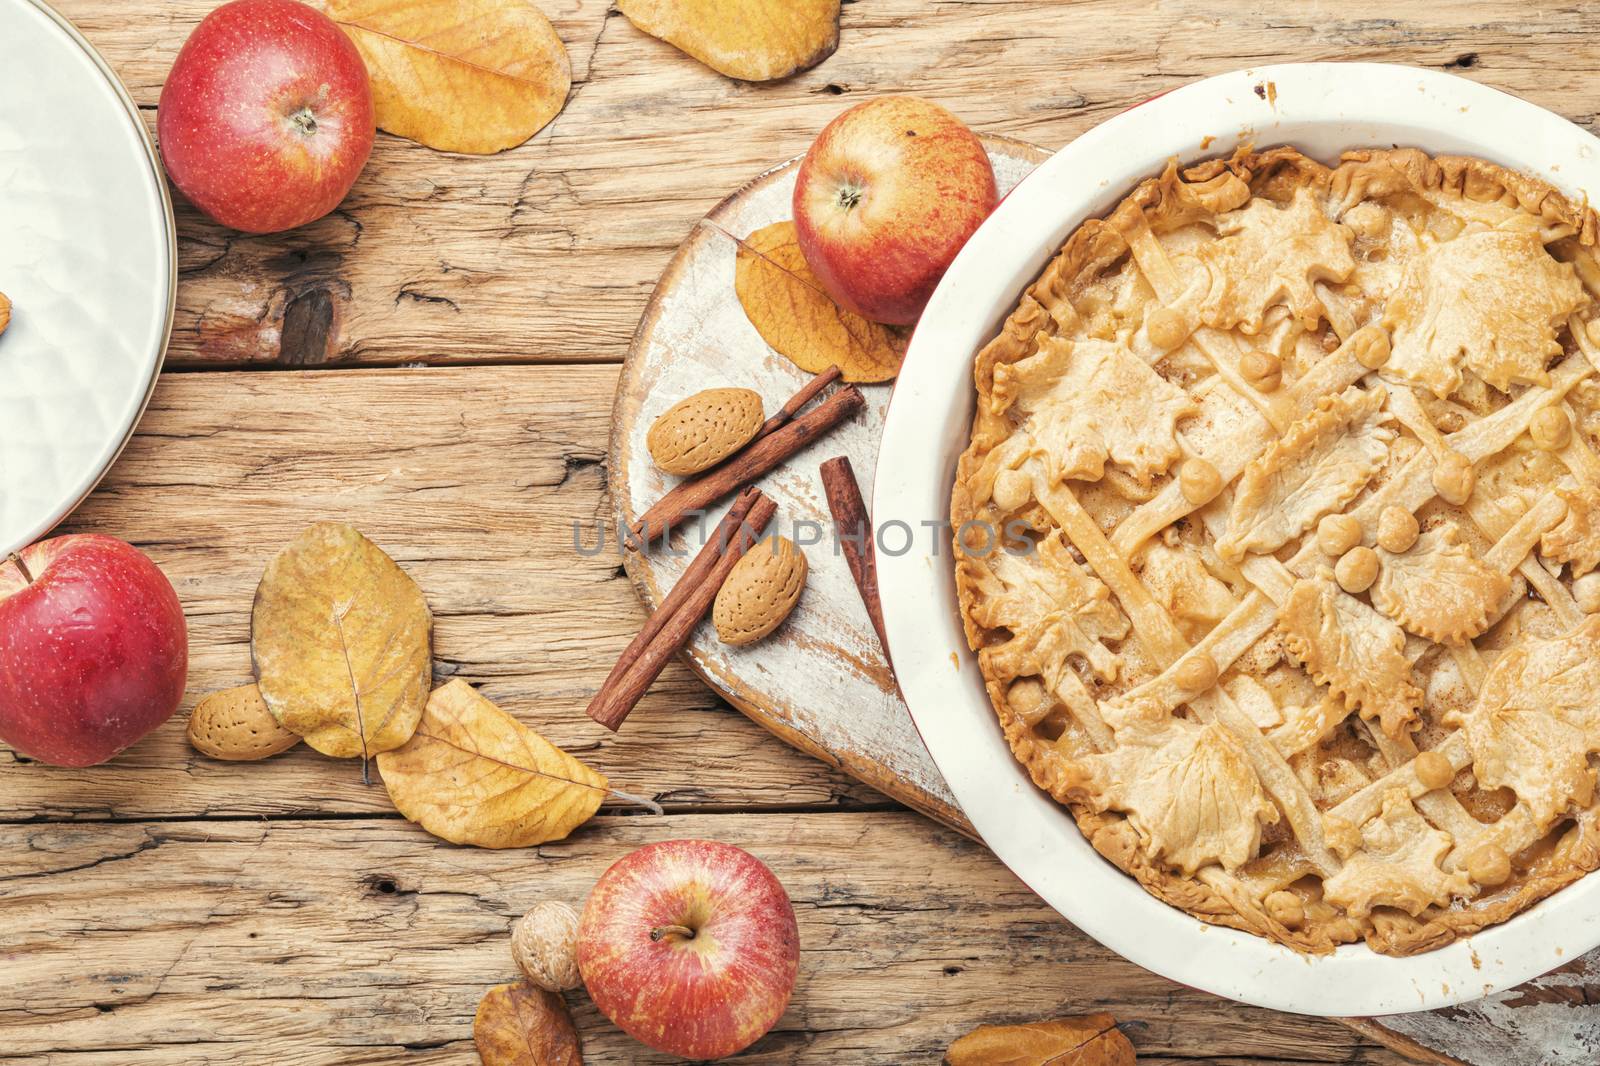 Autumn homemade pie with ripe apples.American apple dessert